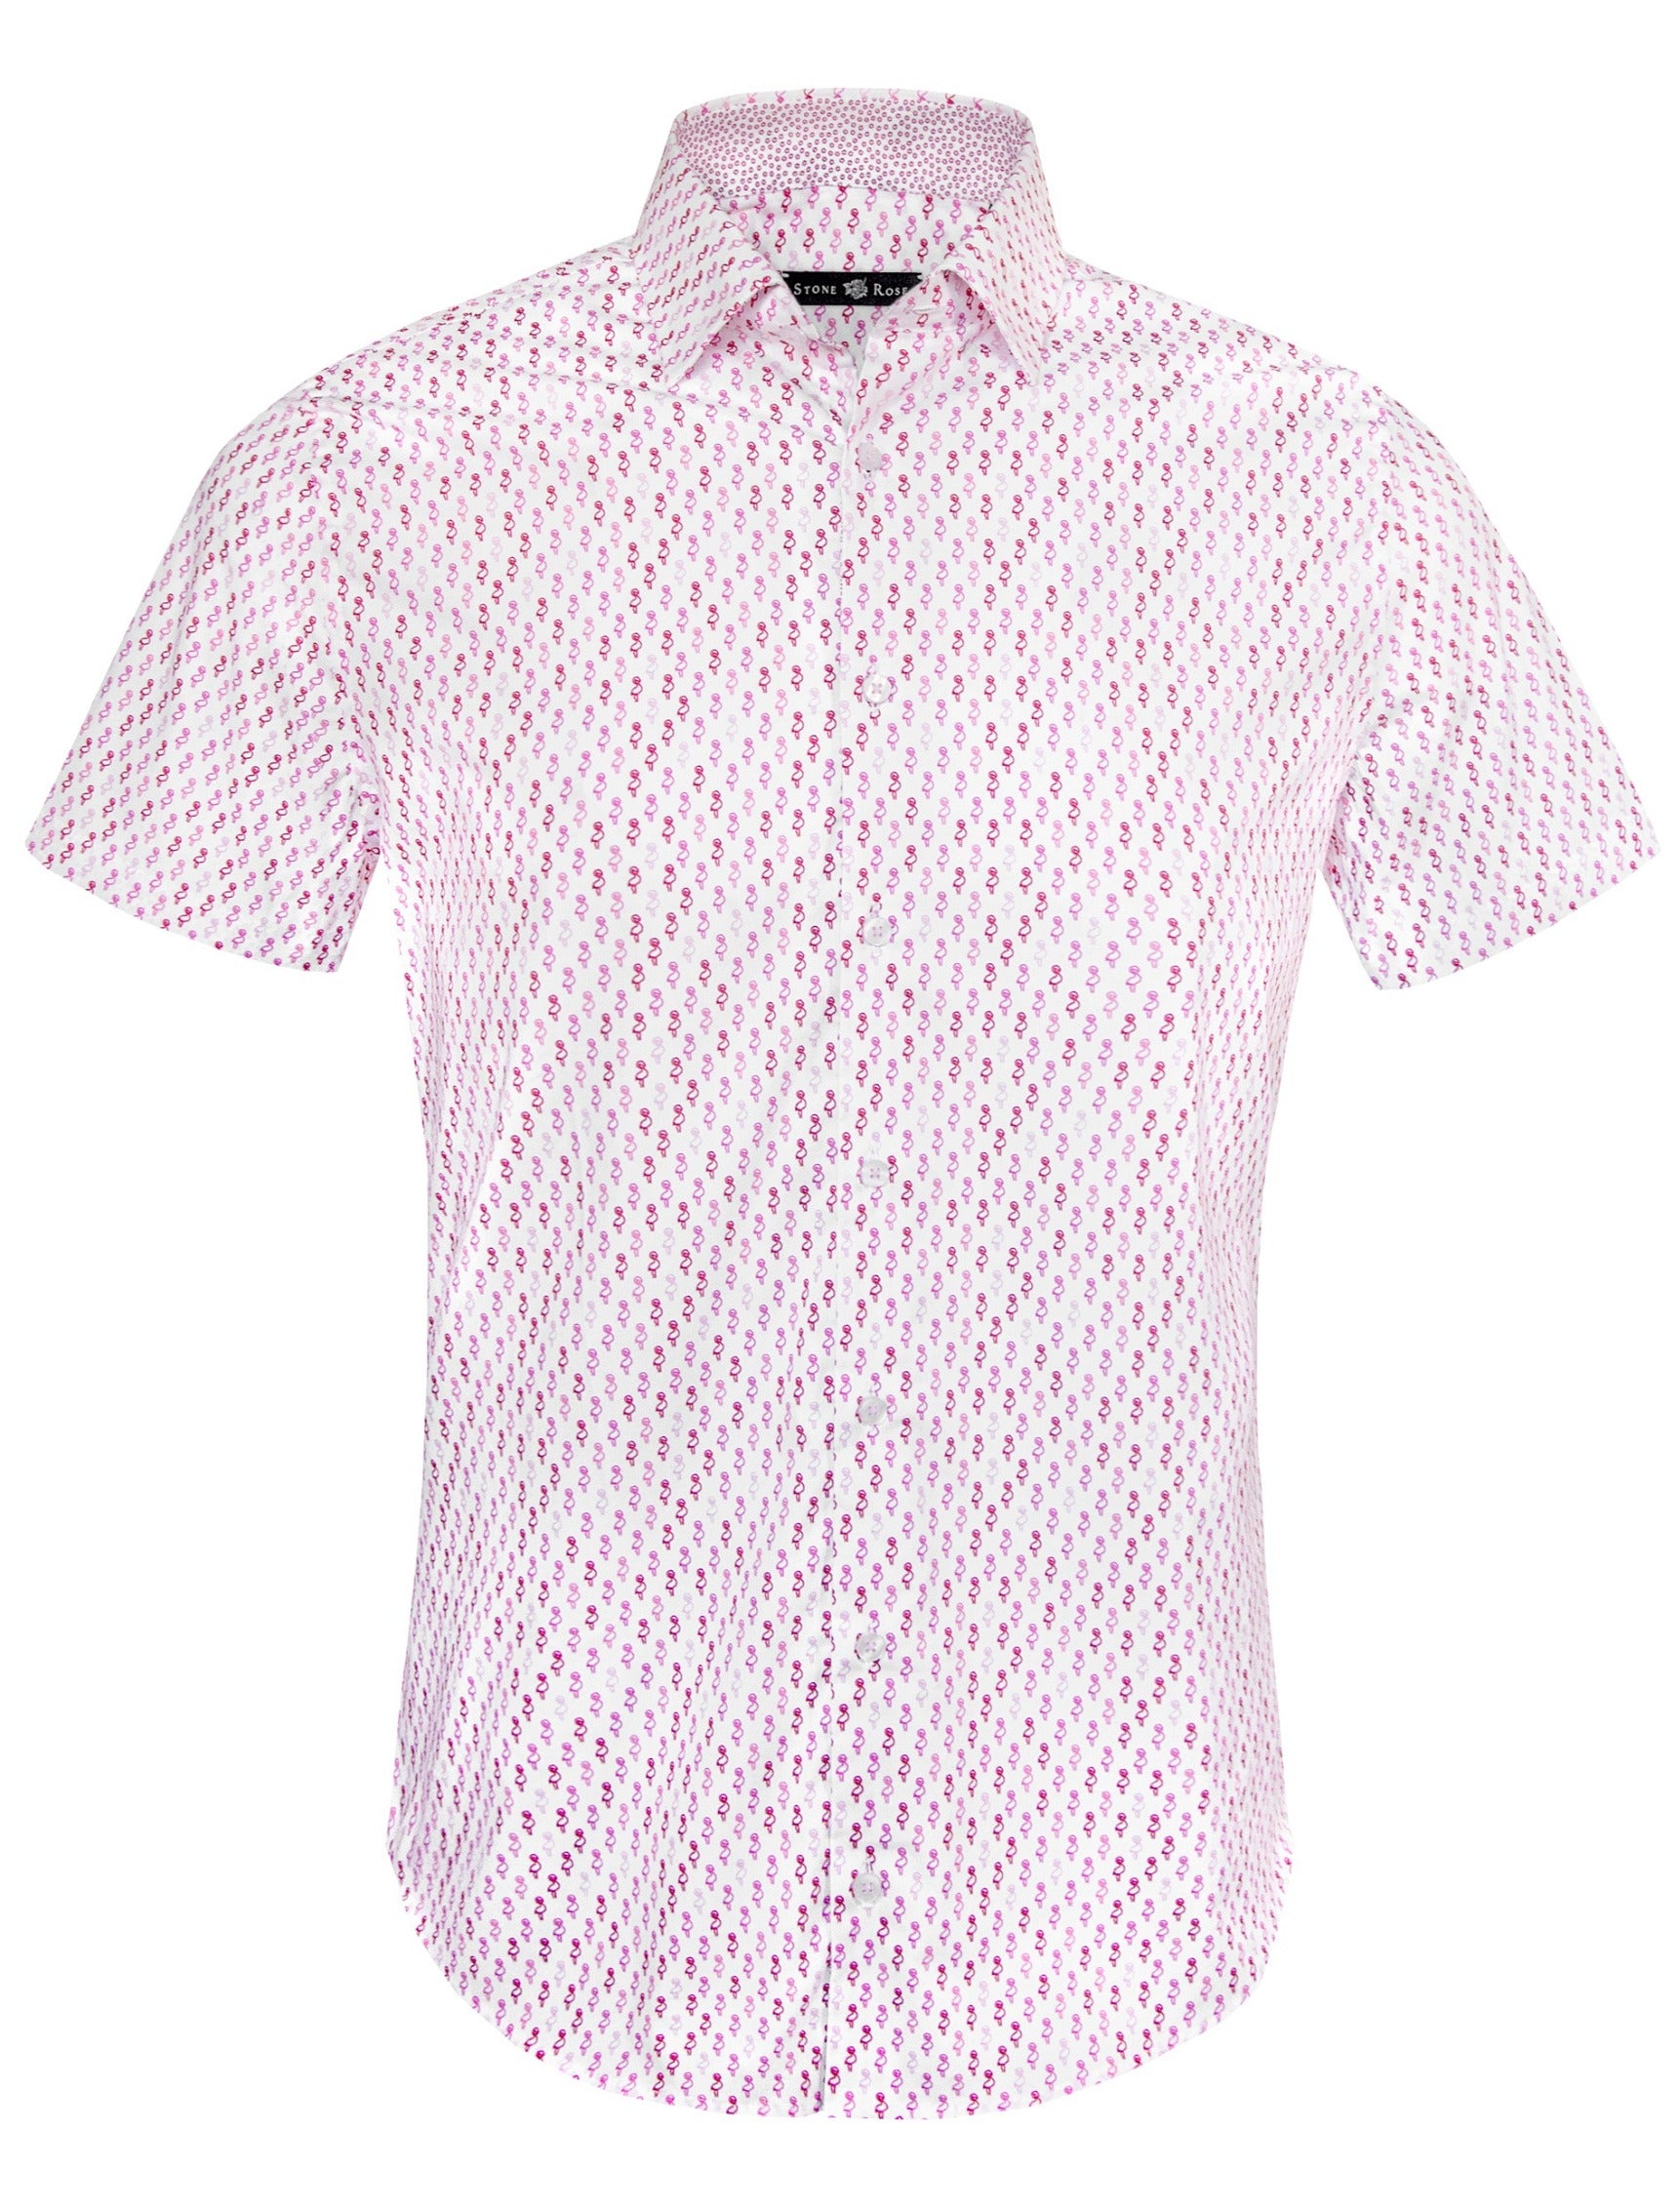 White Short Sleeve Shirt with Pink Flamingo Print